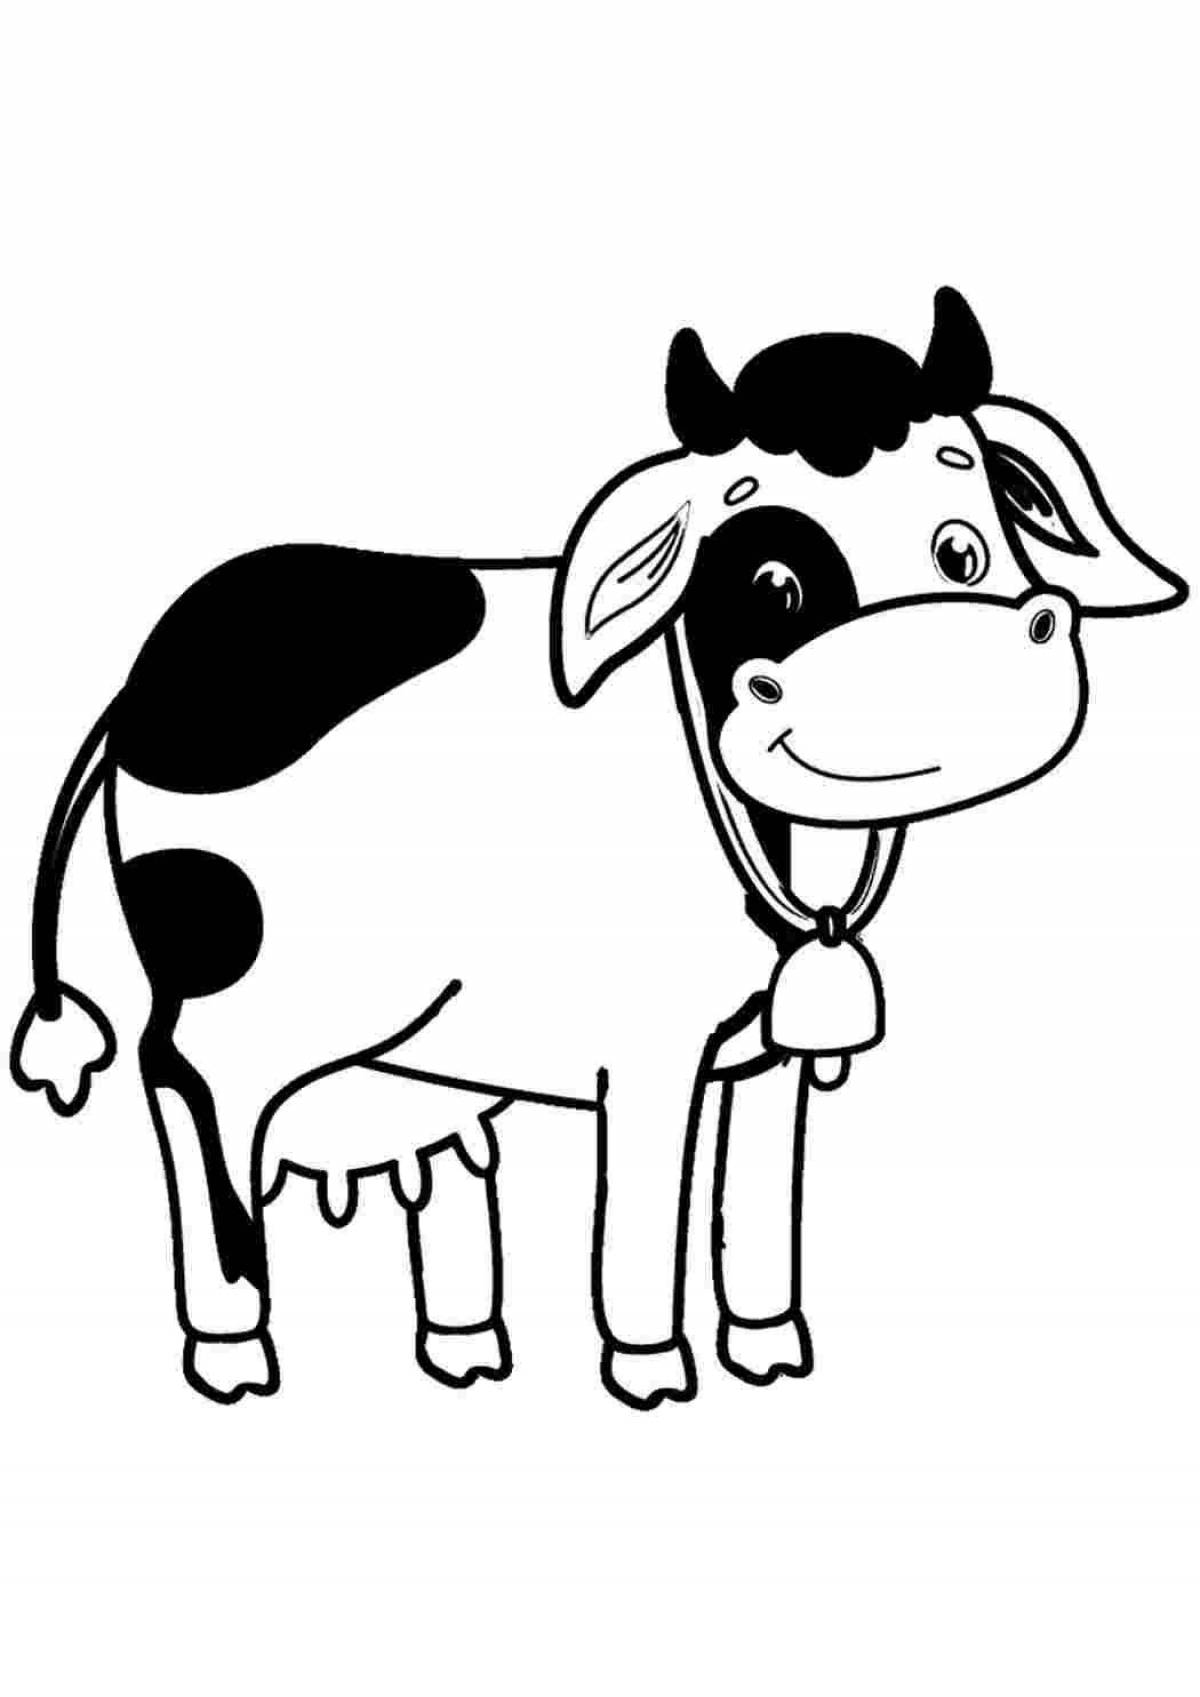 Cow happy coloring page